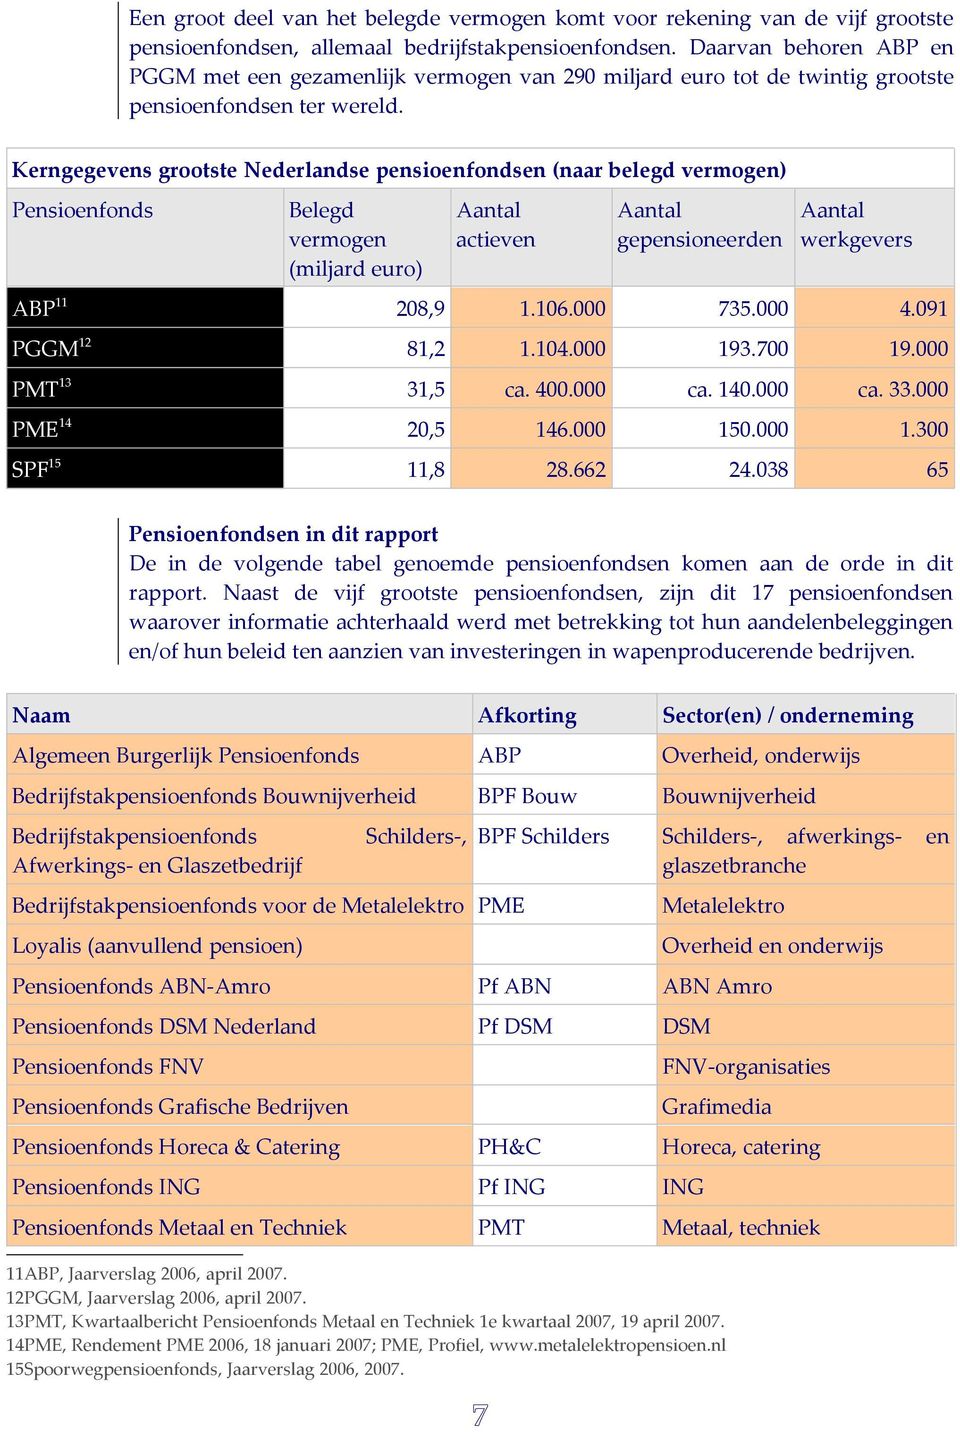 Kerngegevens grootste Nederlandse pensioenfondsen (naar belegd vermogen) Pensioenfonds Belegd vermogen (miljard euro) Aantal actieven Aantal gepensioneerden Aantal werkgevers ABP 11 208,9 1.106.